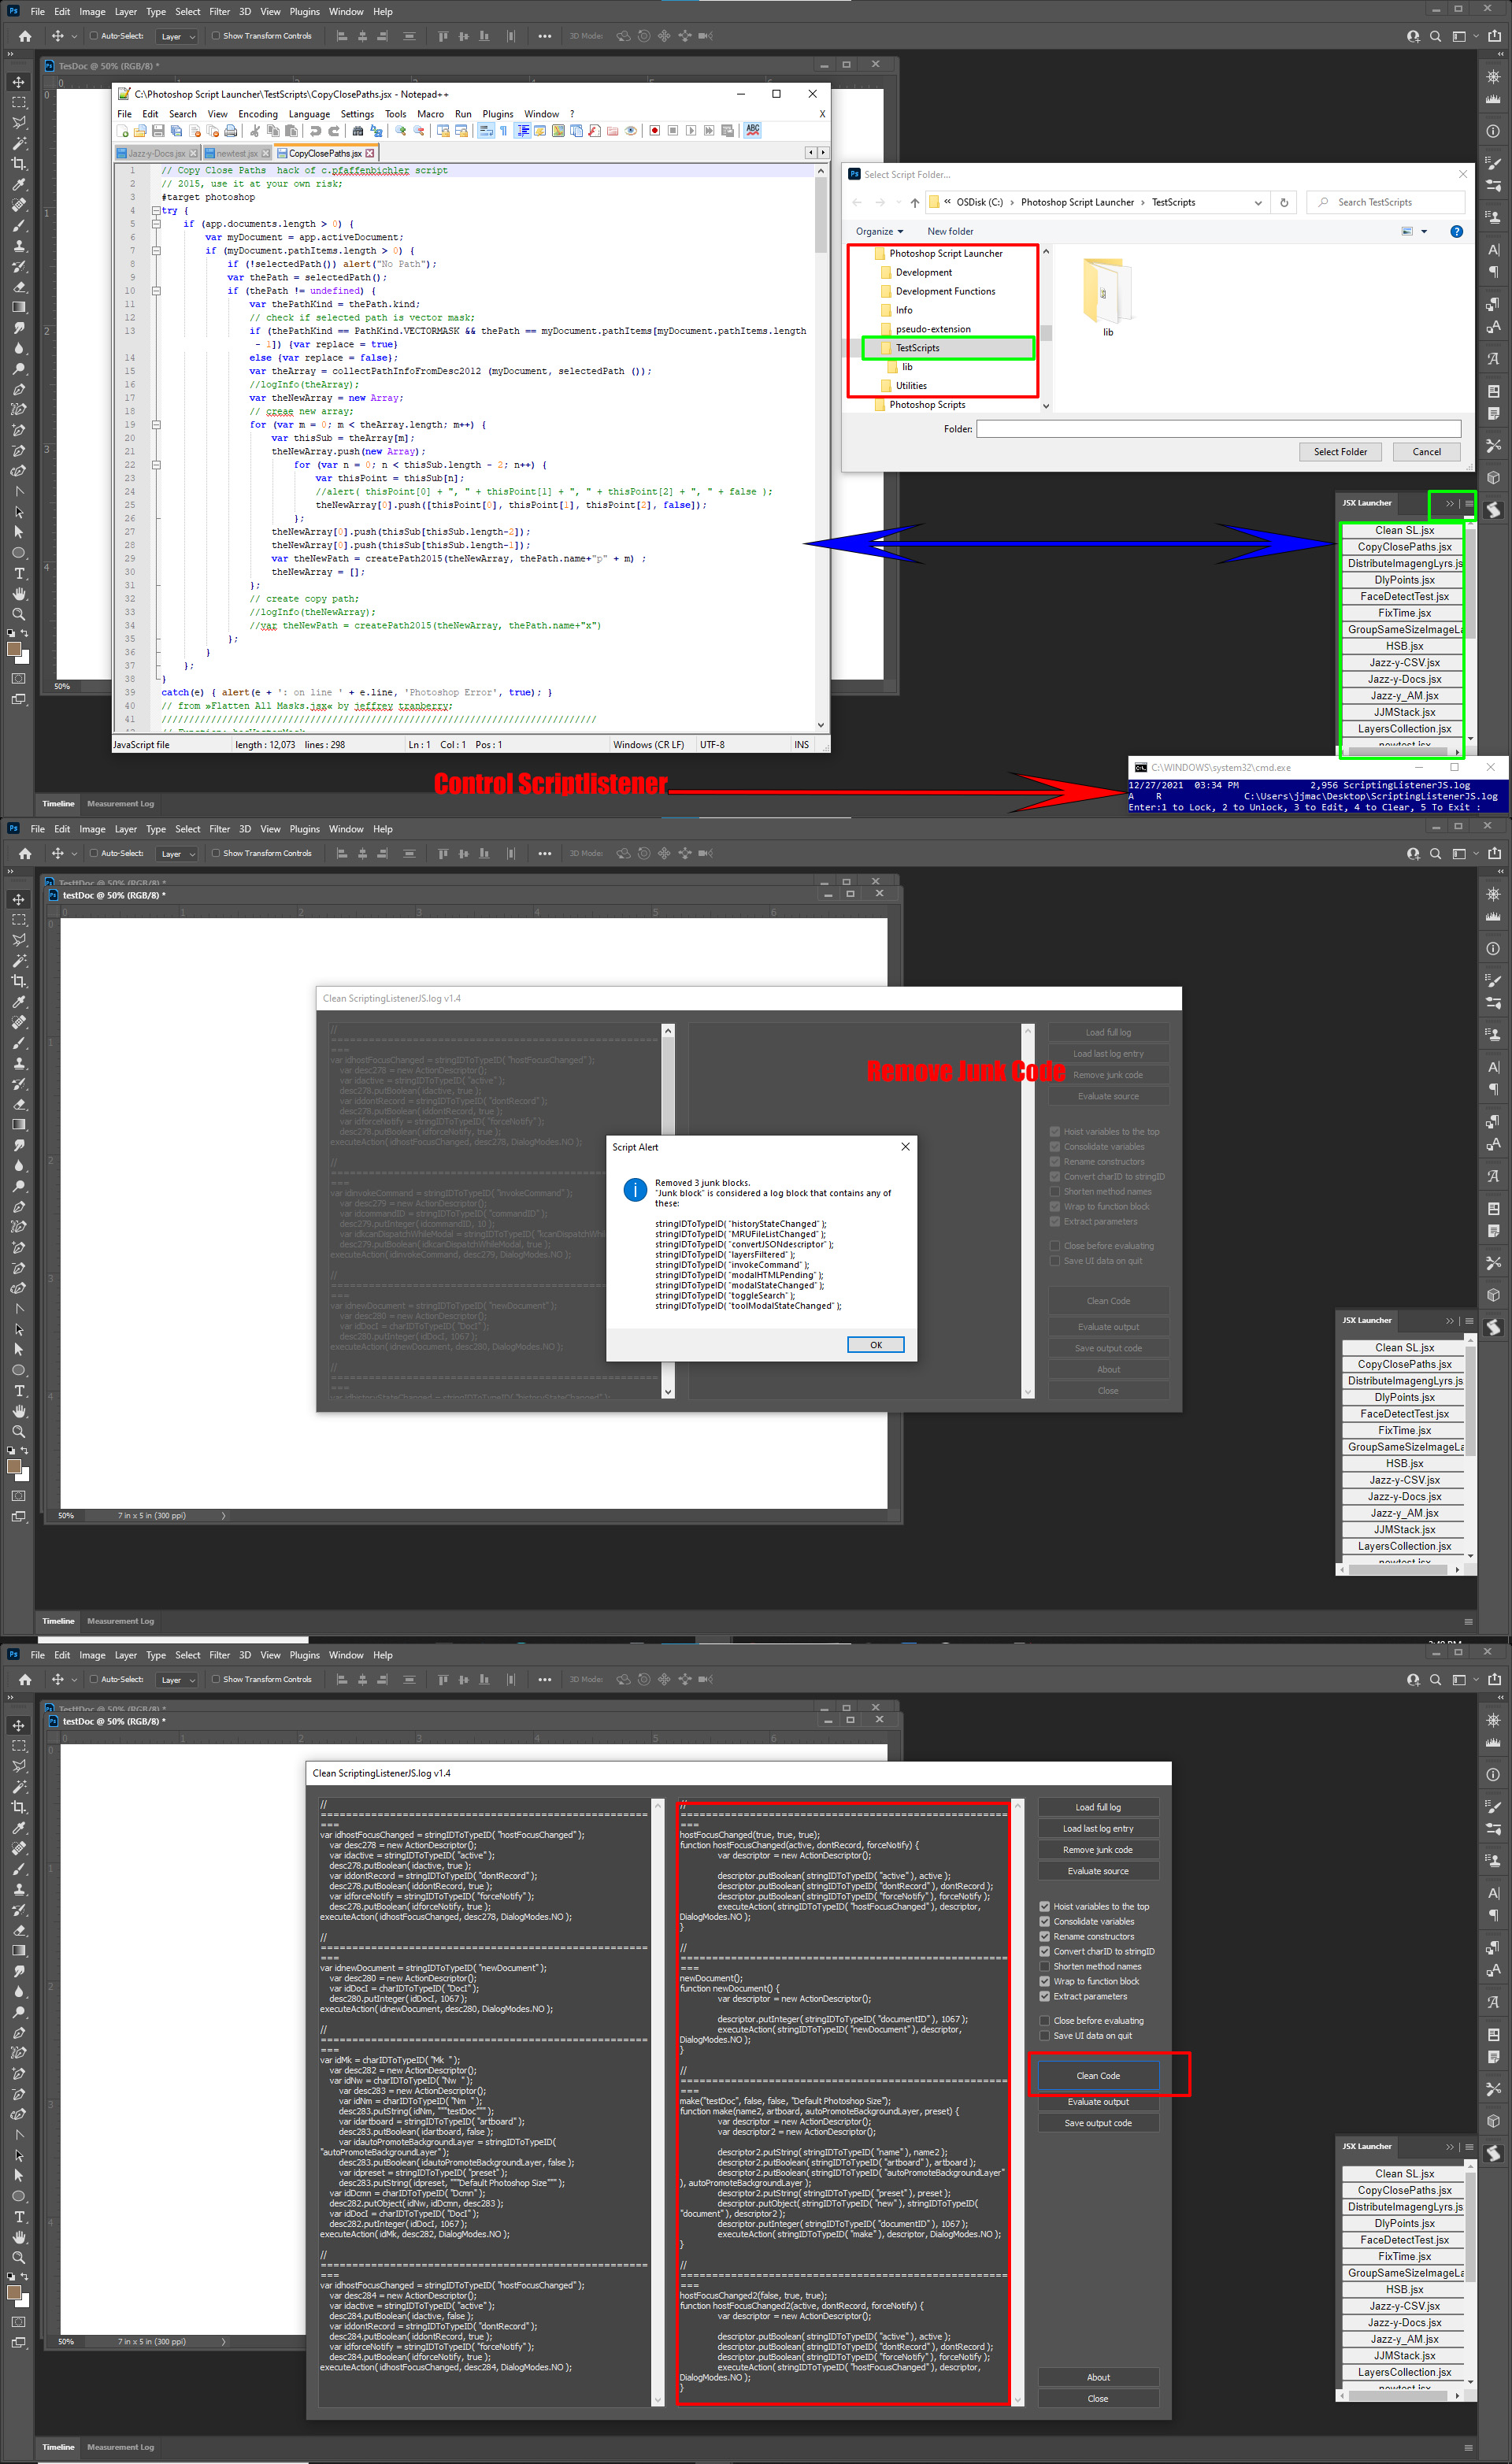 Studio workspace 3D view not appearing - Studio Bugs - Developer Forum